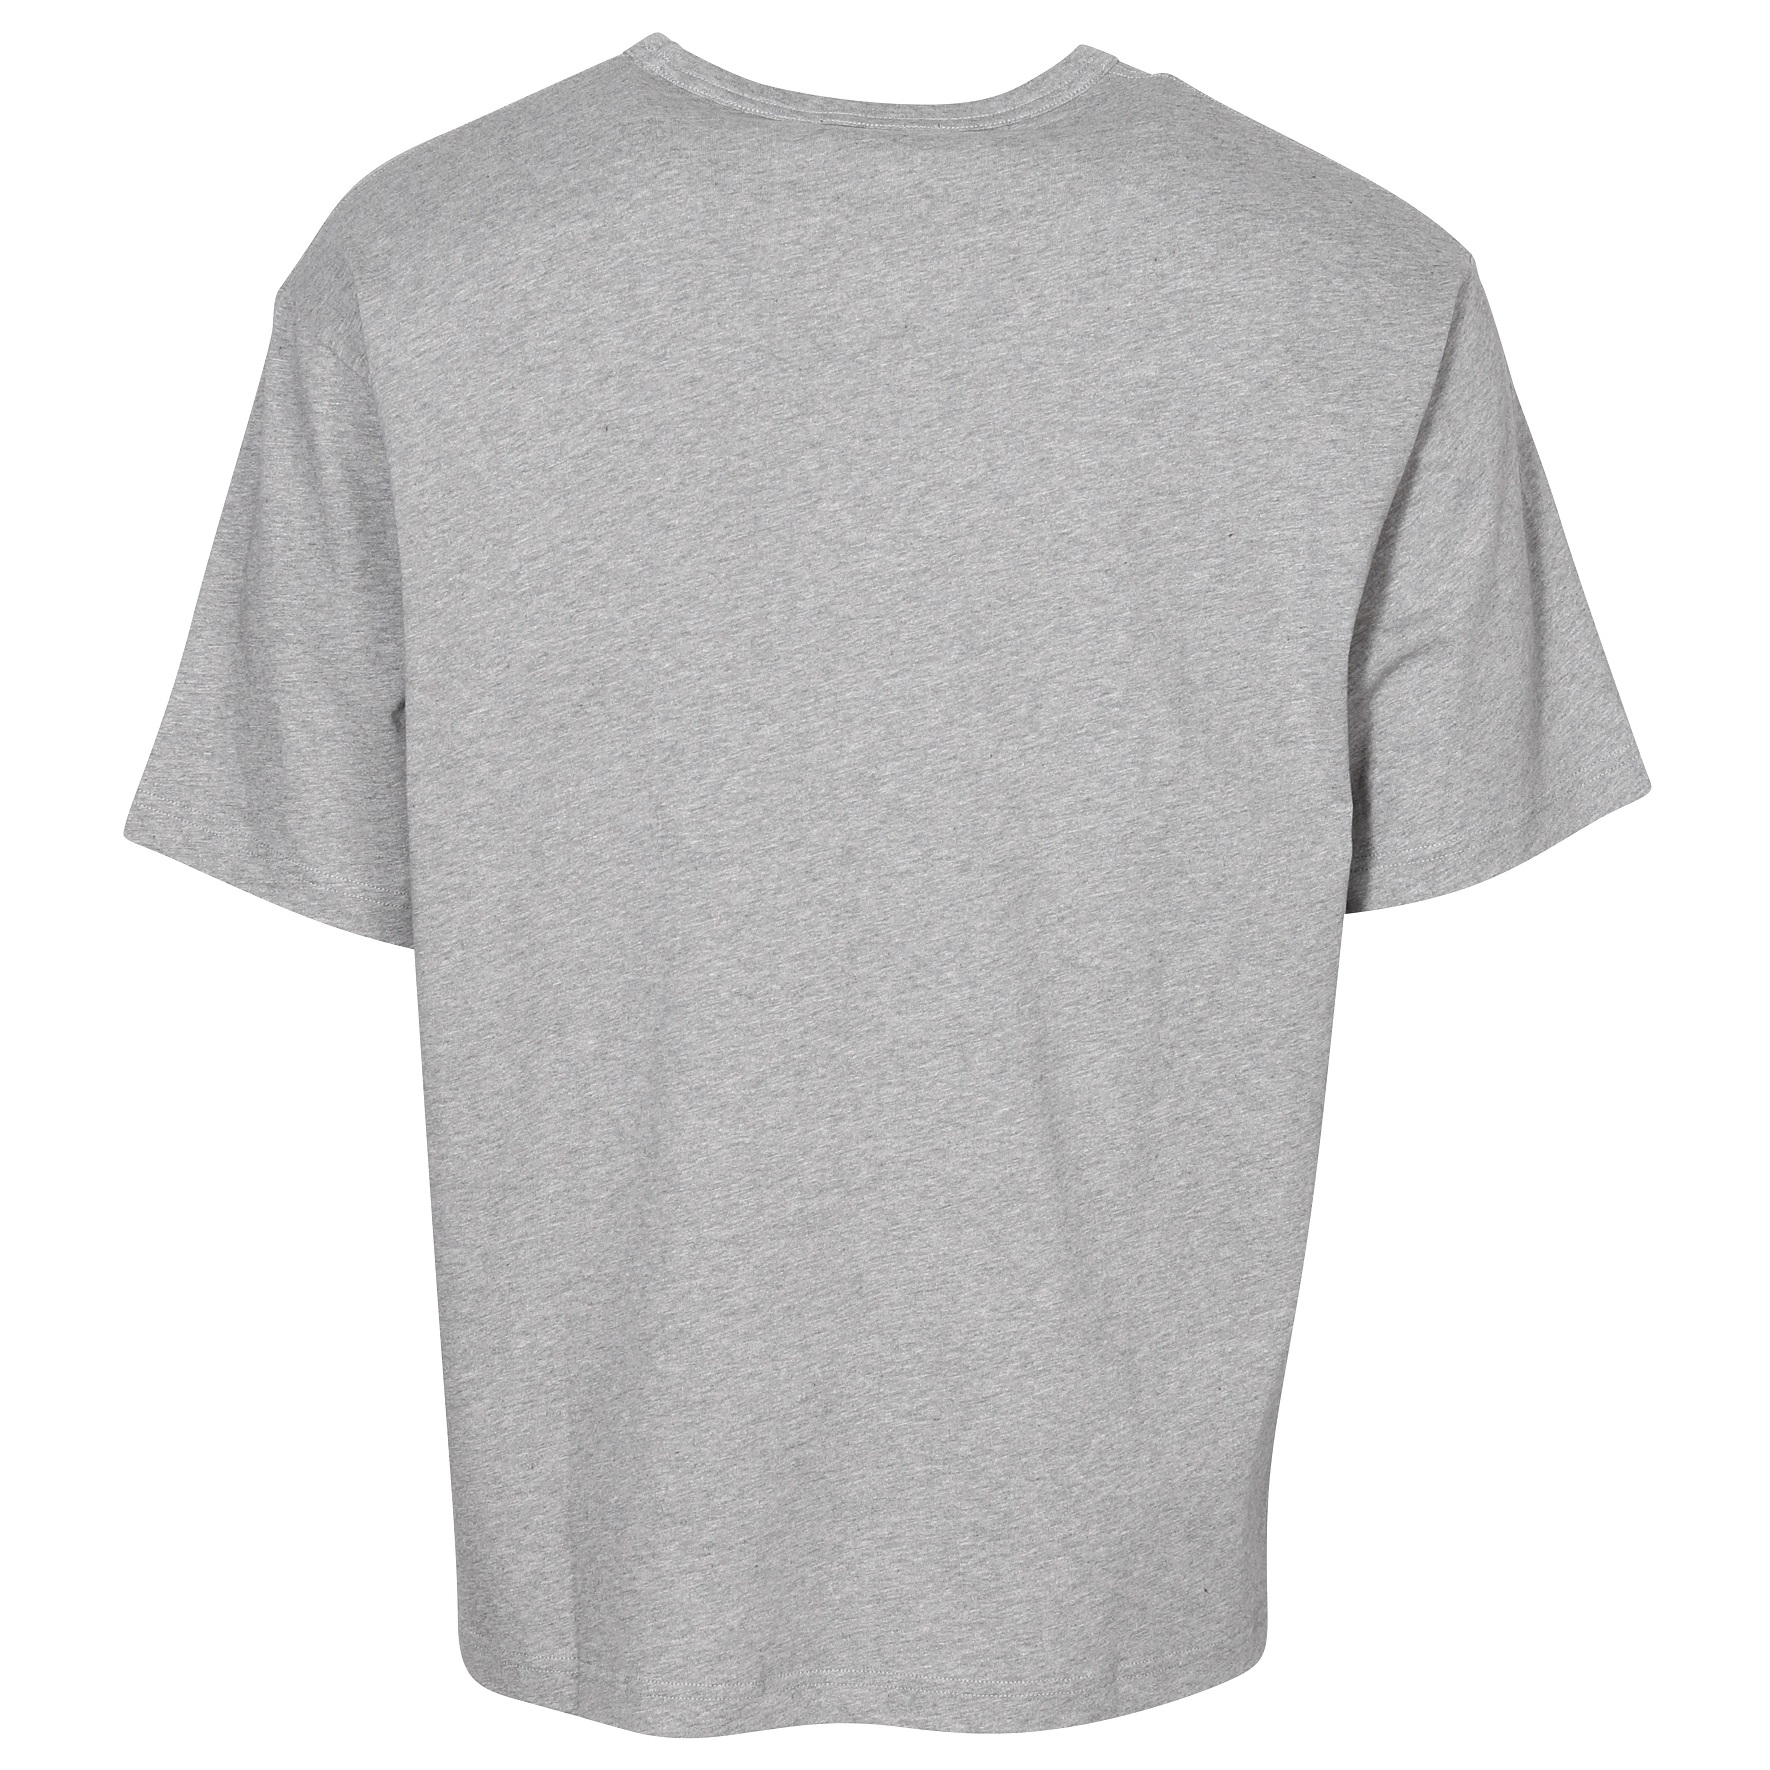 ACNE STUDIOS Unisex Oversize Face T-Shirt in Light Grey Melange XS